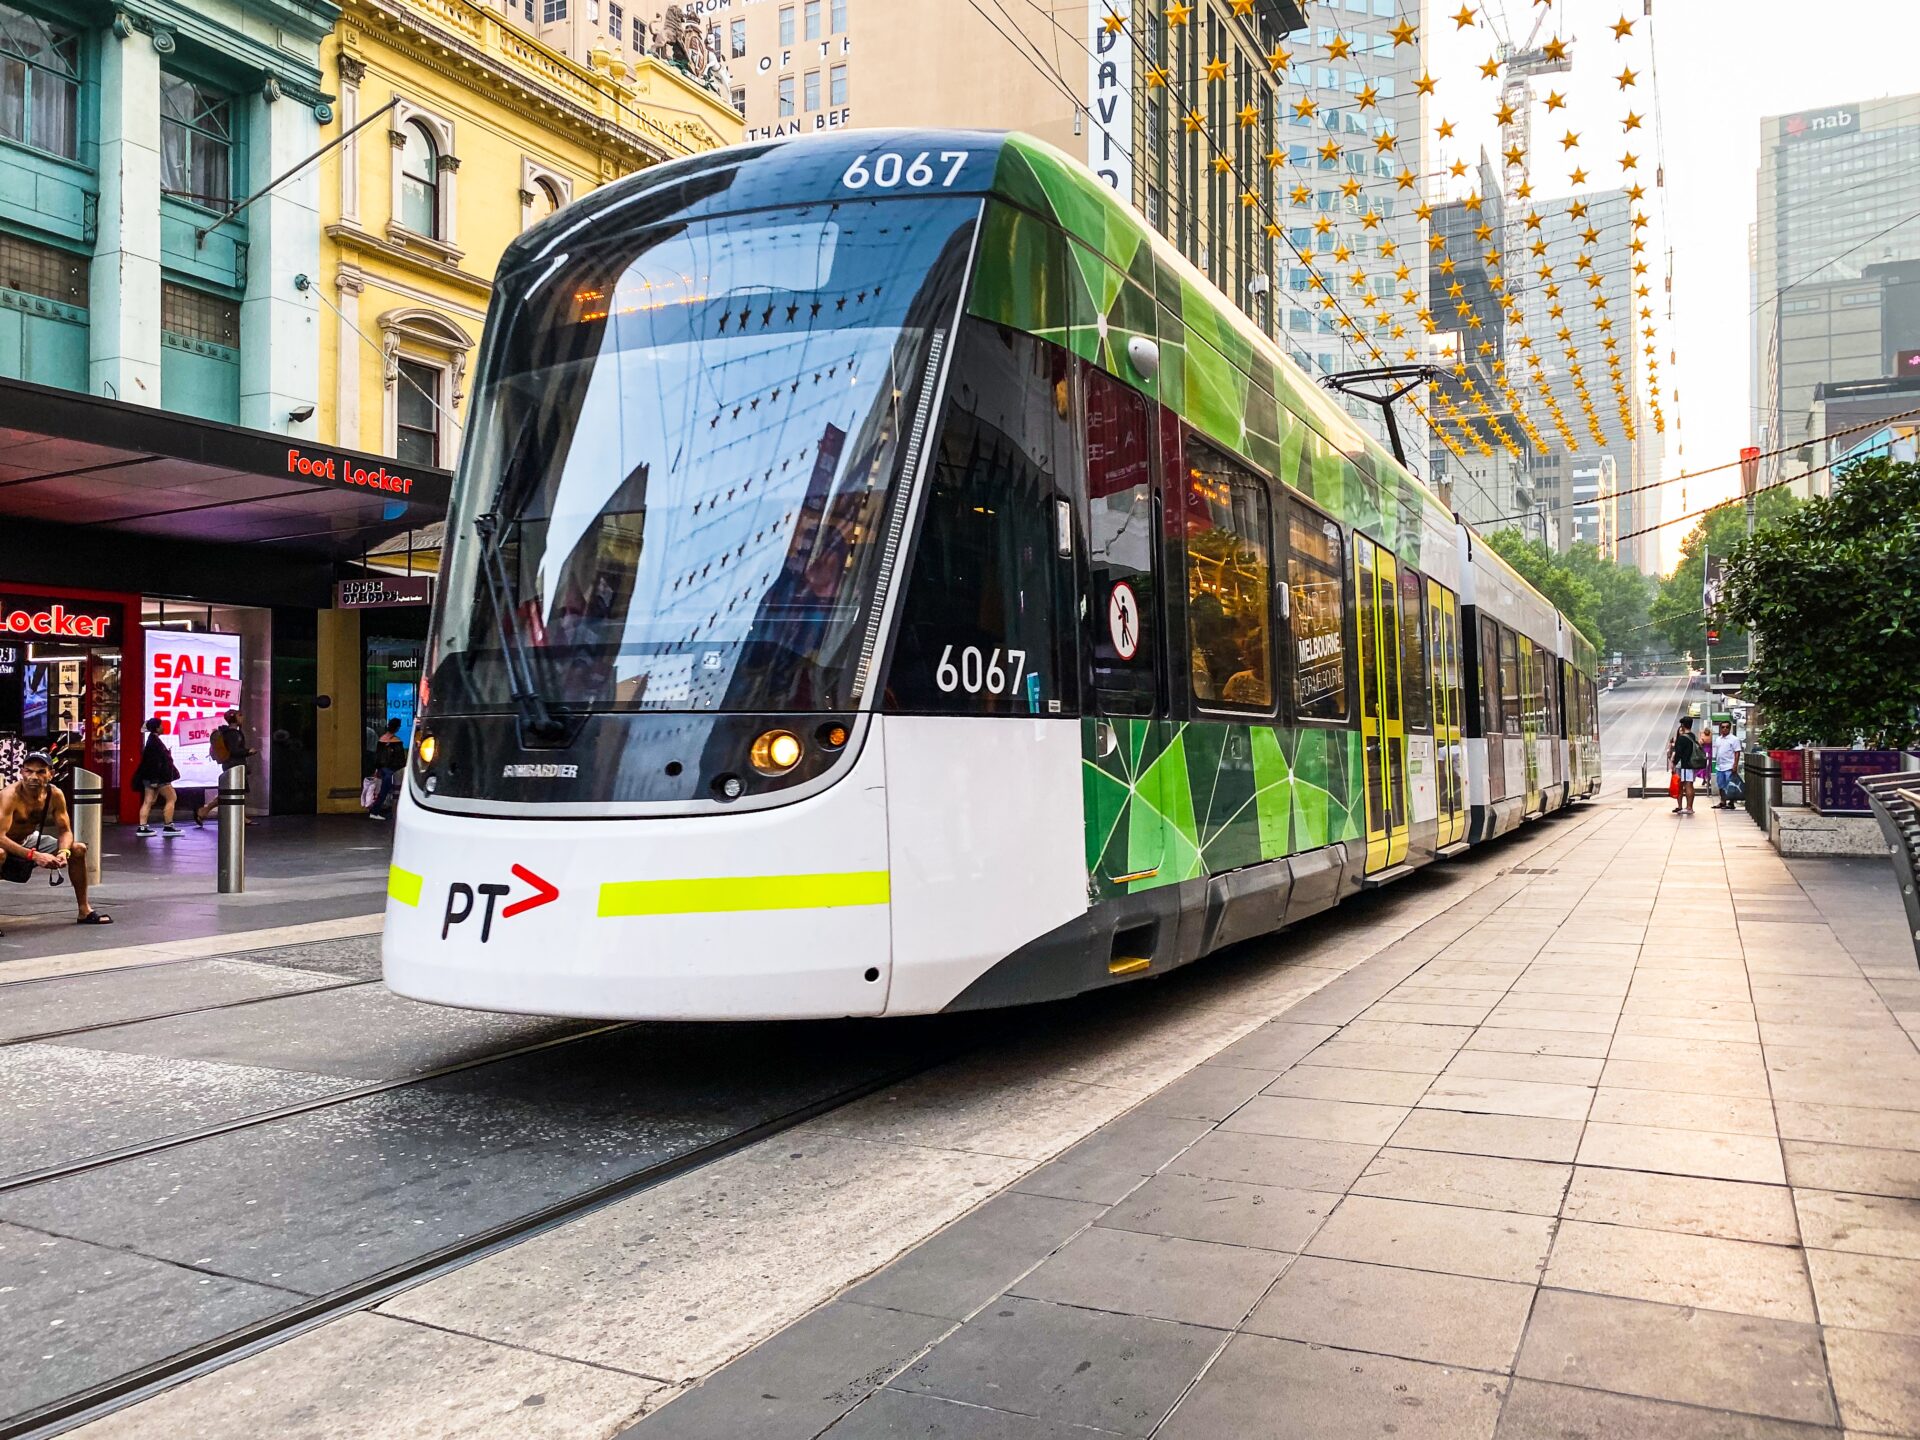 Yarra Trams in Melbourne, Australia: Iconic public transport network